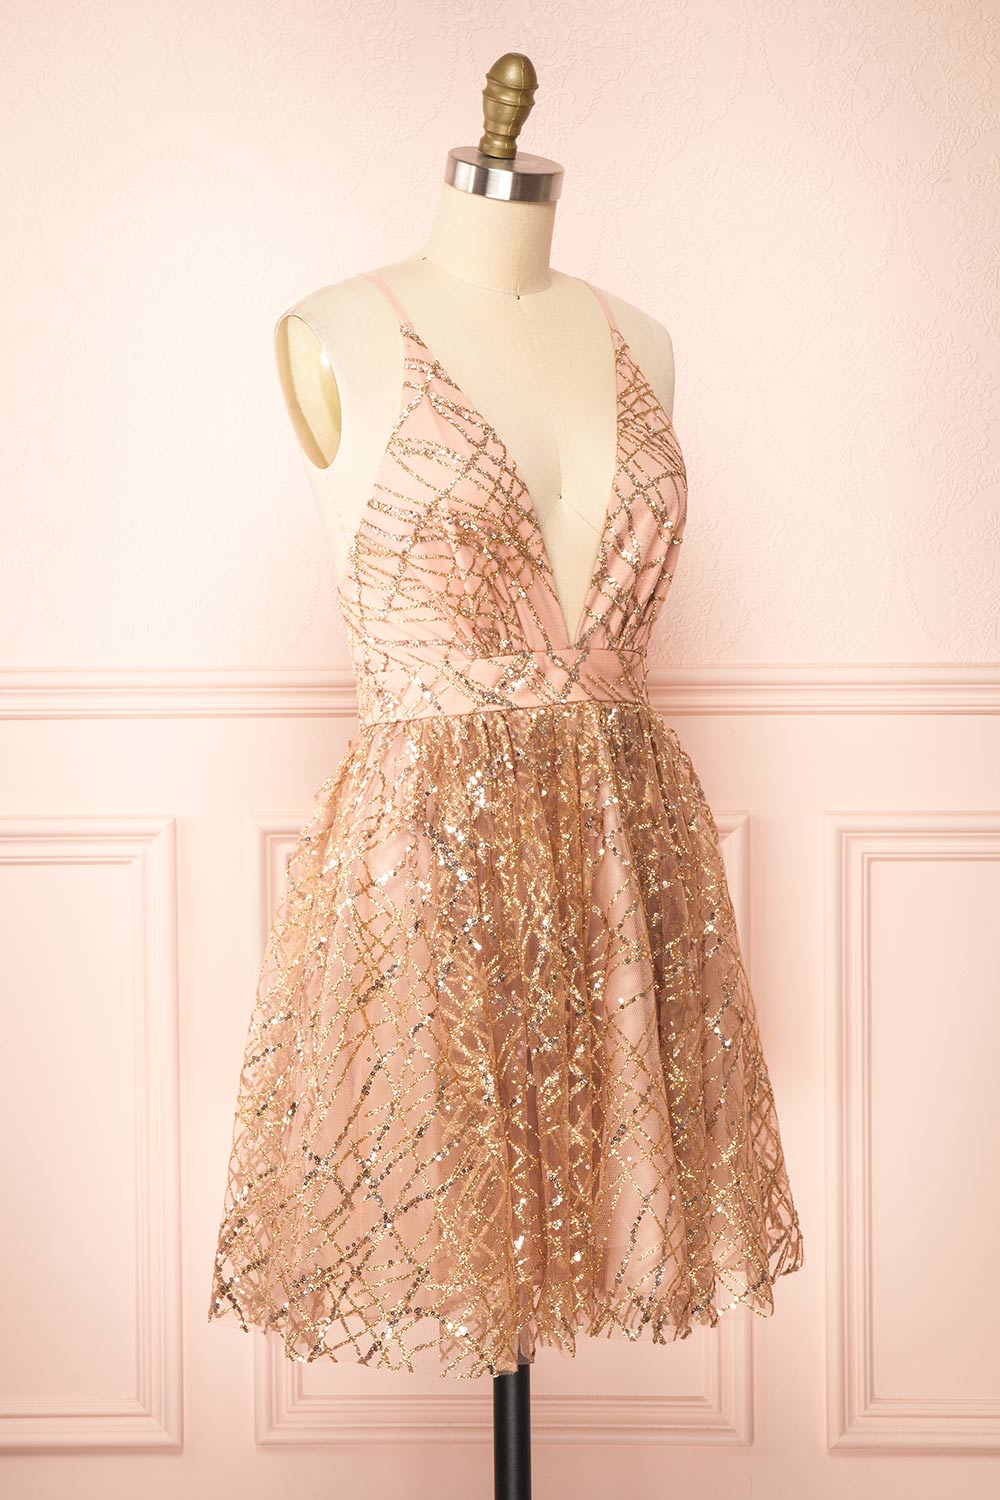 Astral Rose Gold Backless Short Sequin Dress | Boutique 1861 side view